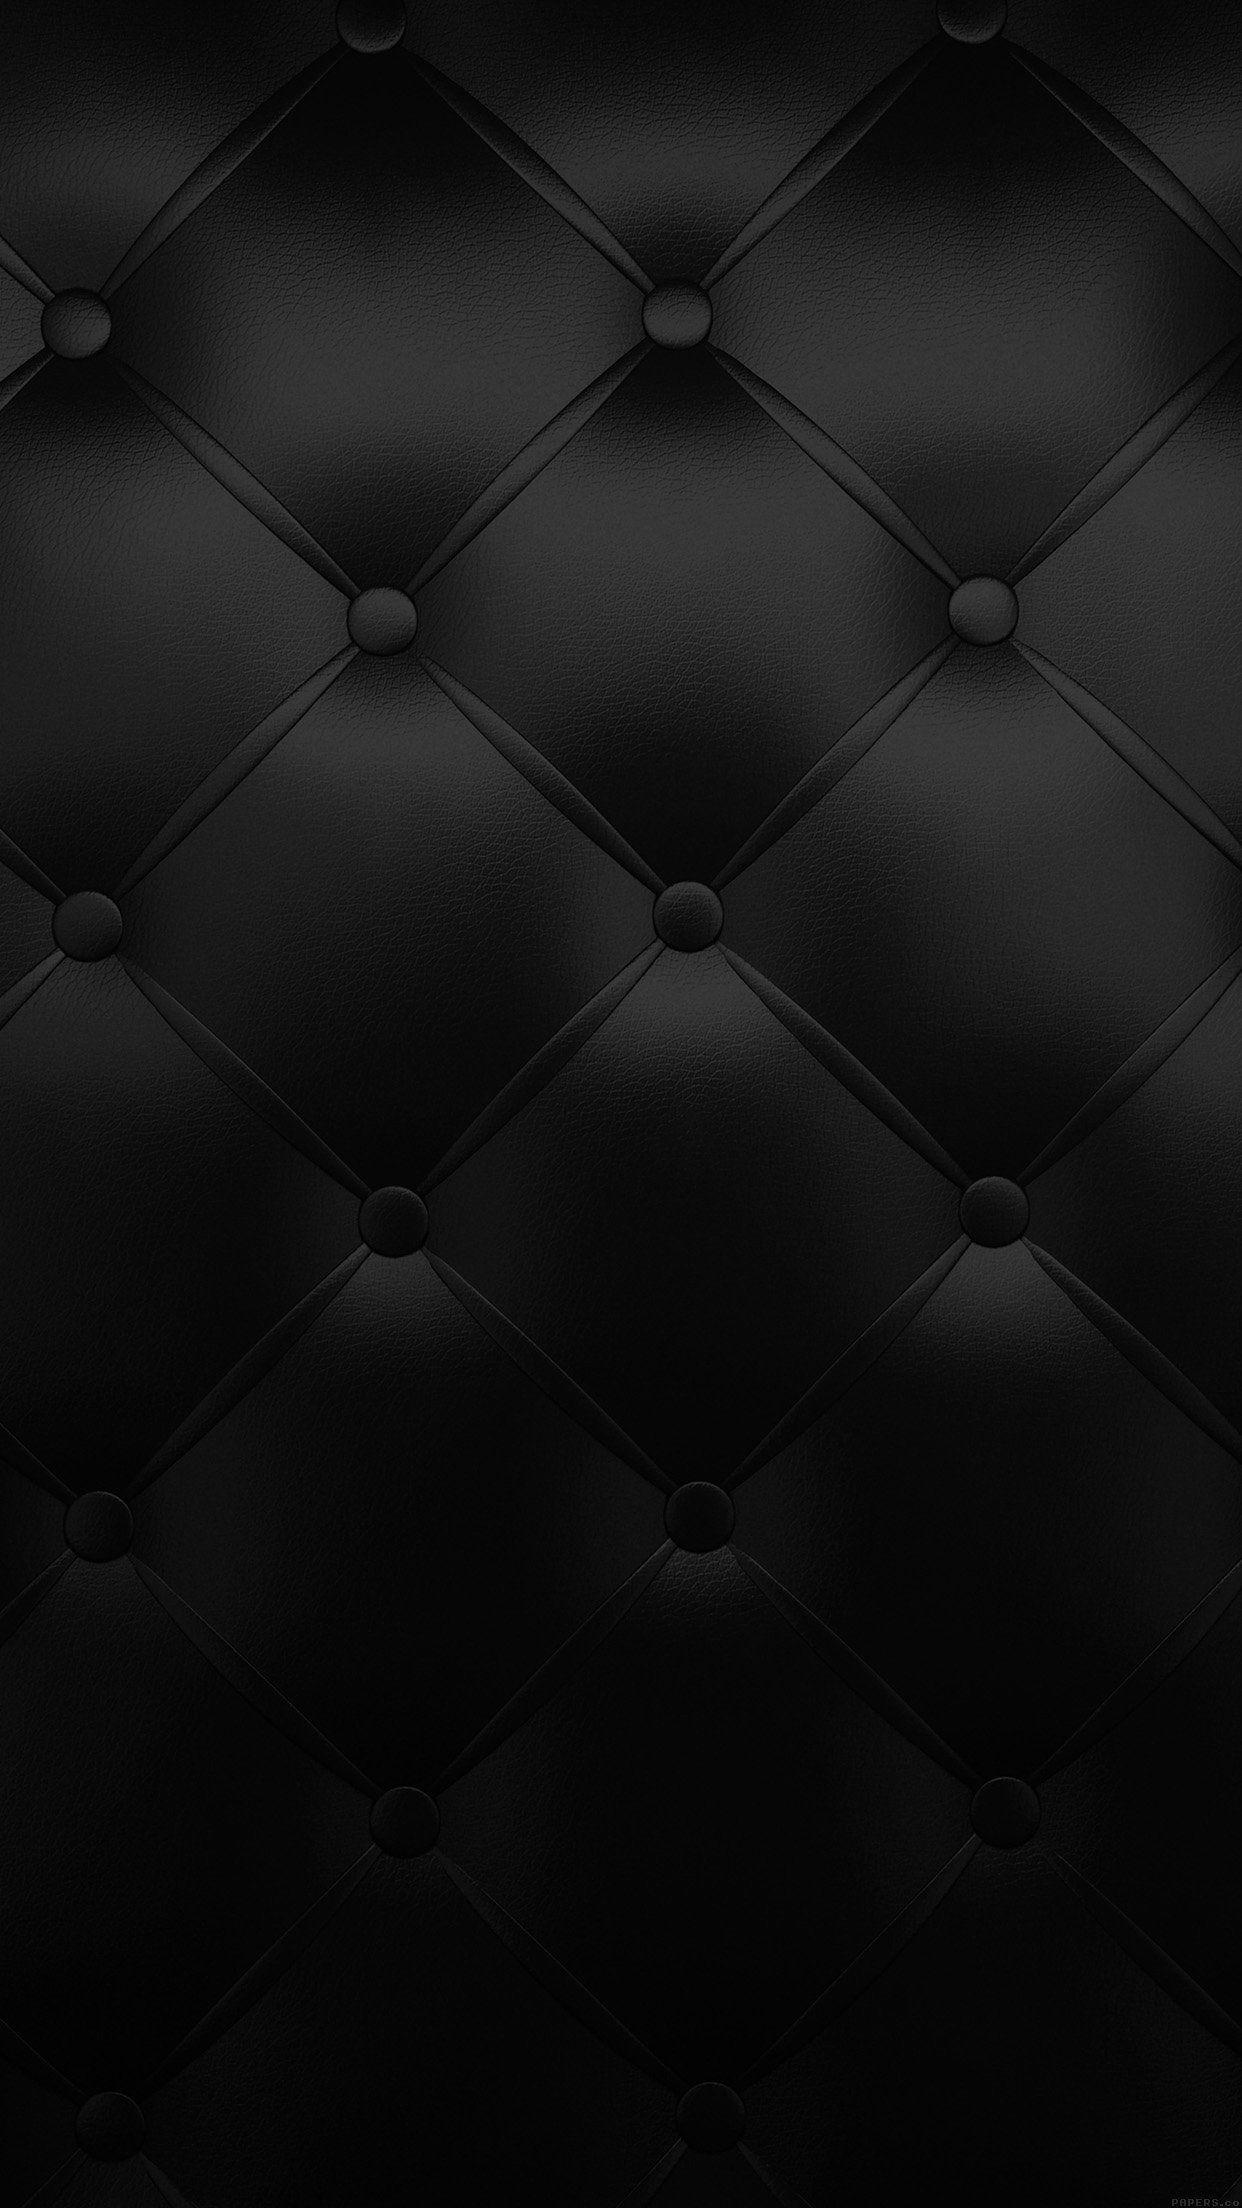 3d Wallpaper Iphone Black Image Num 93